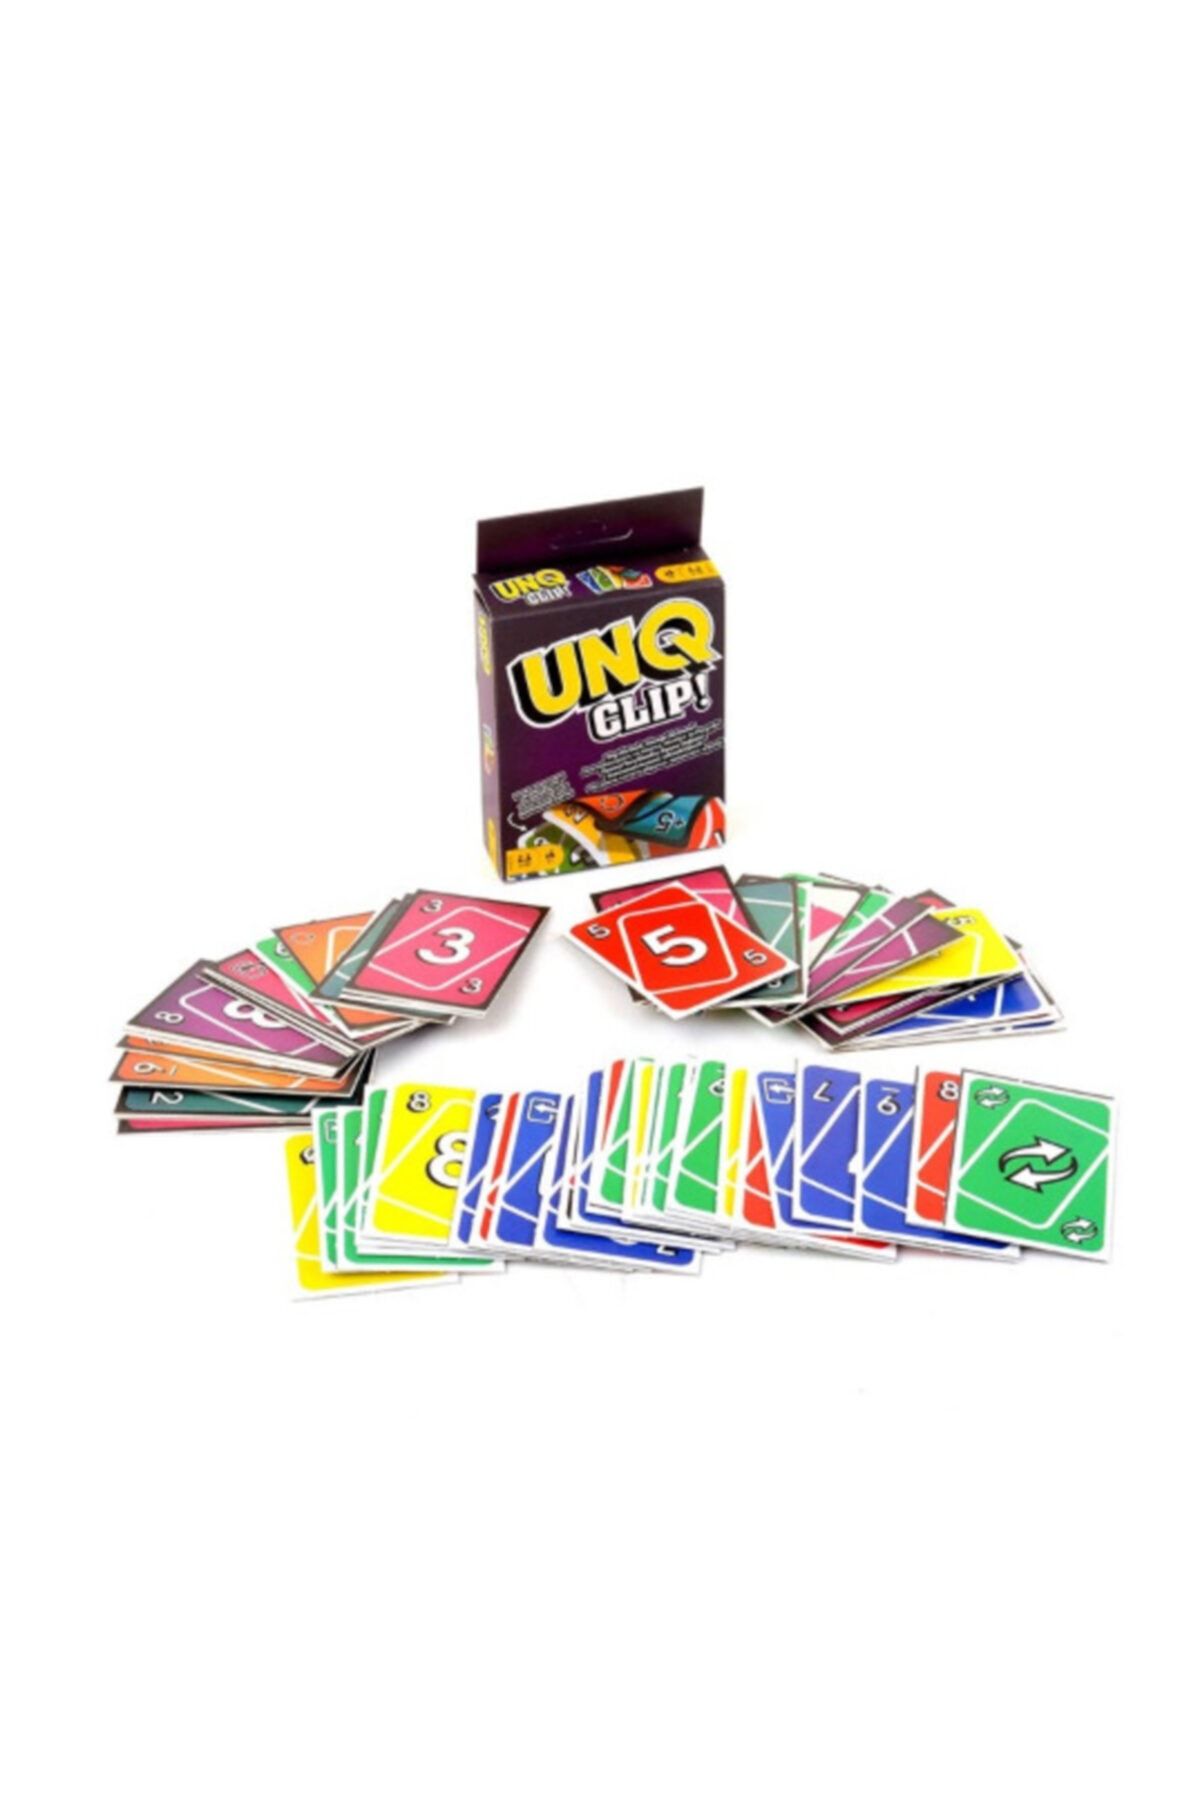 UNO Uno Clip Oyun Aile Oyunu